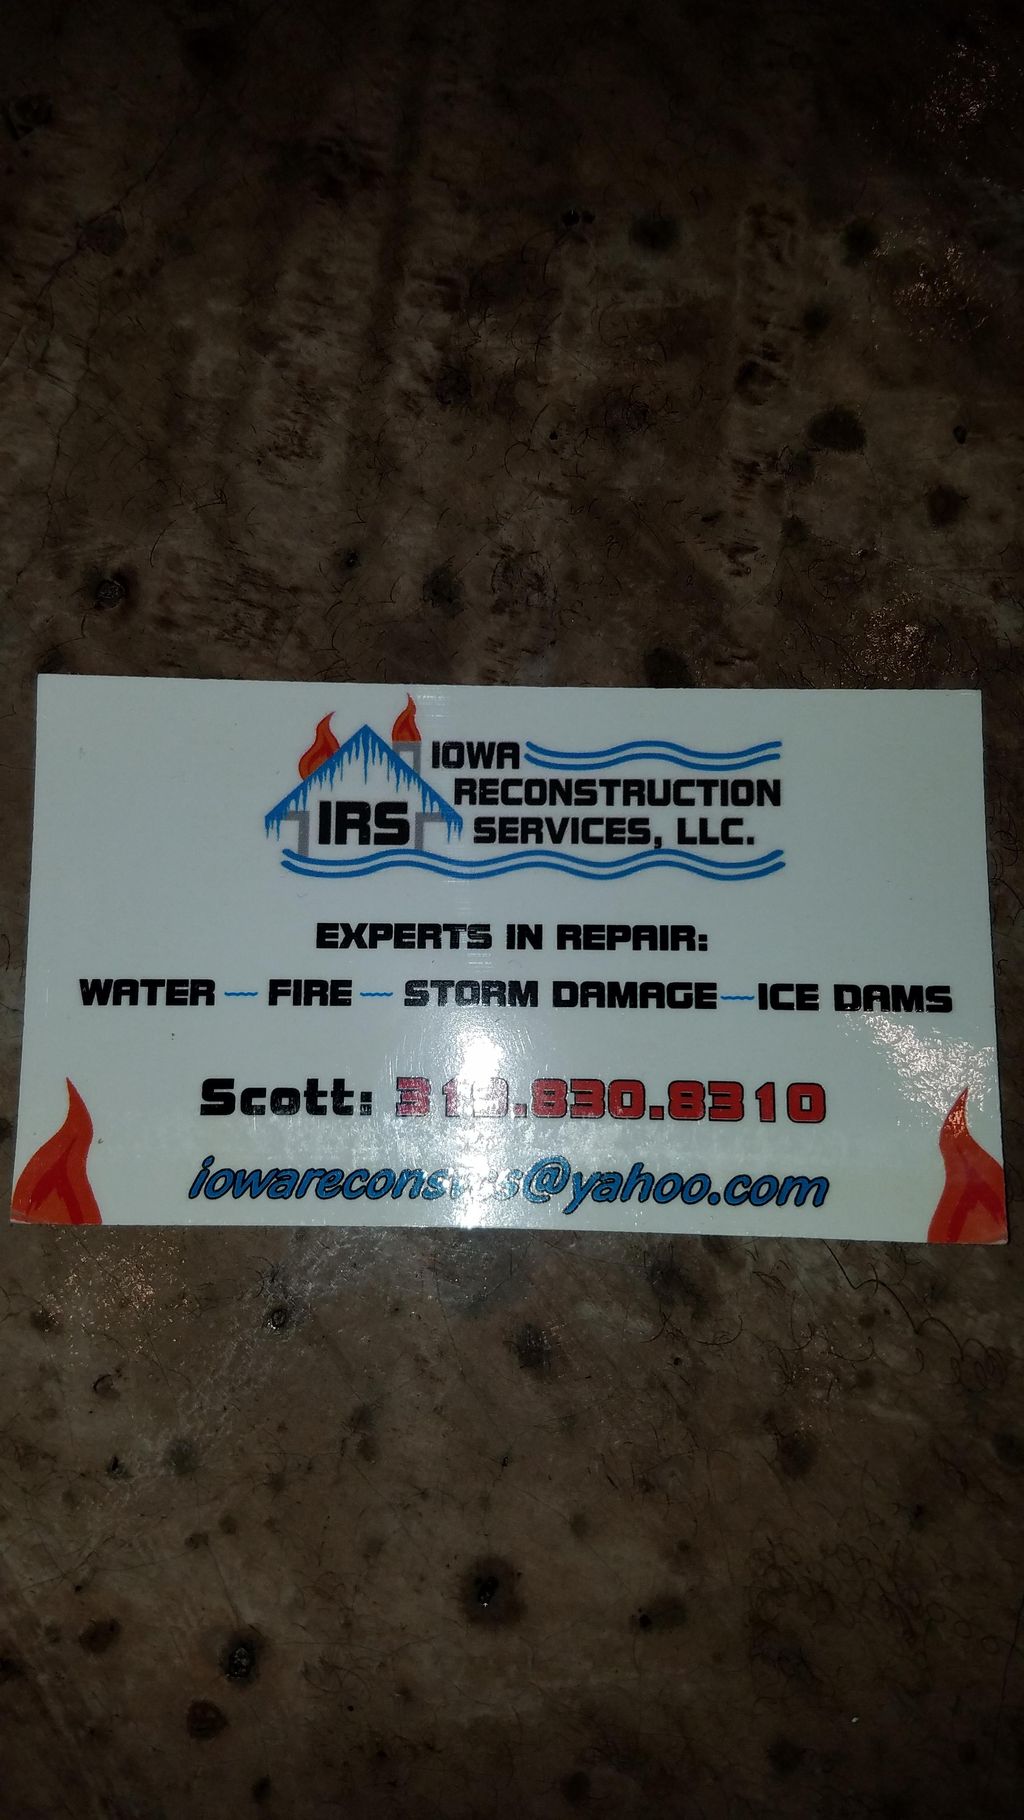 Iowa Reconstruction Services, LLC